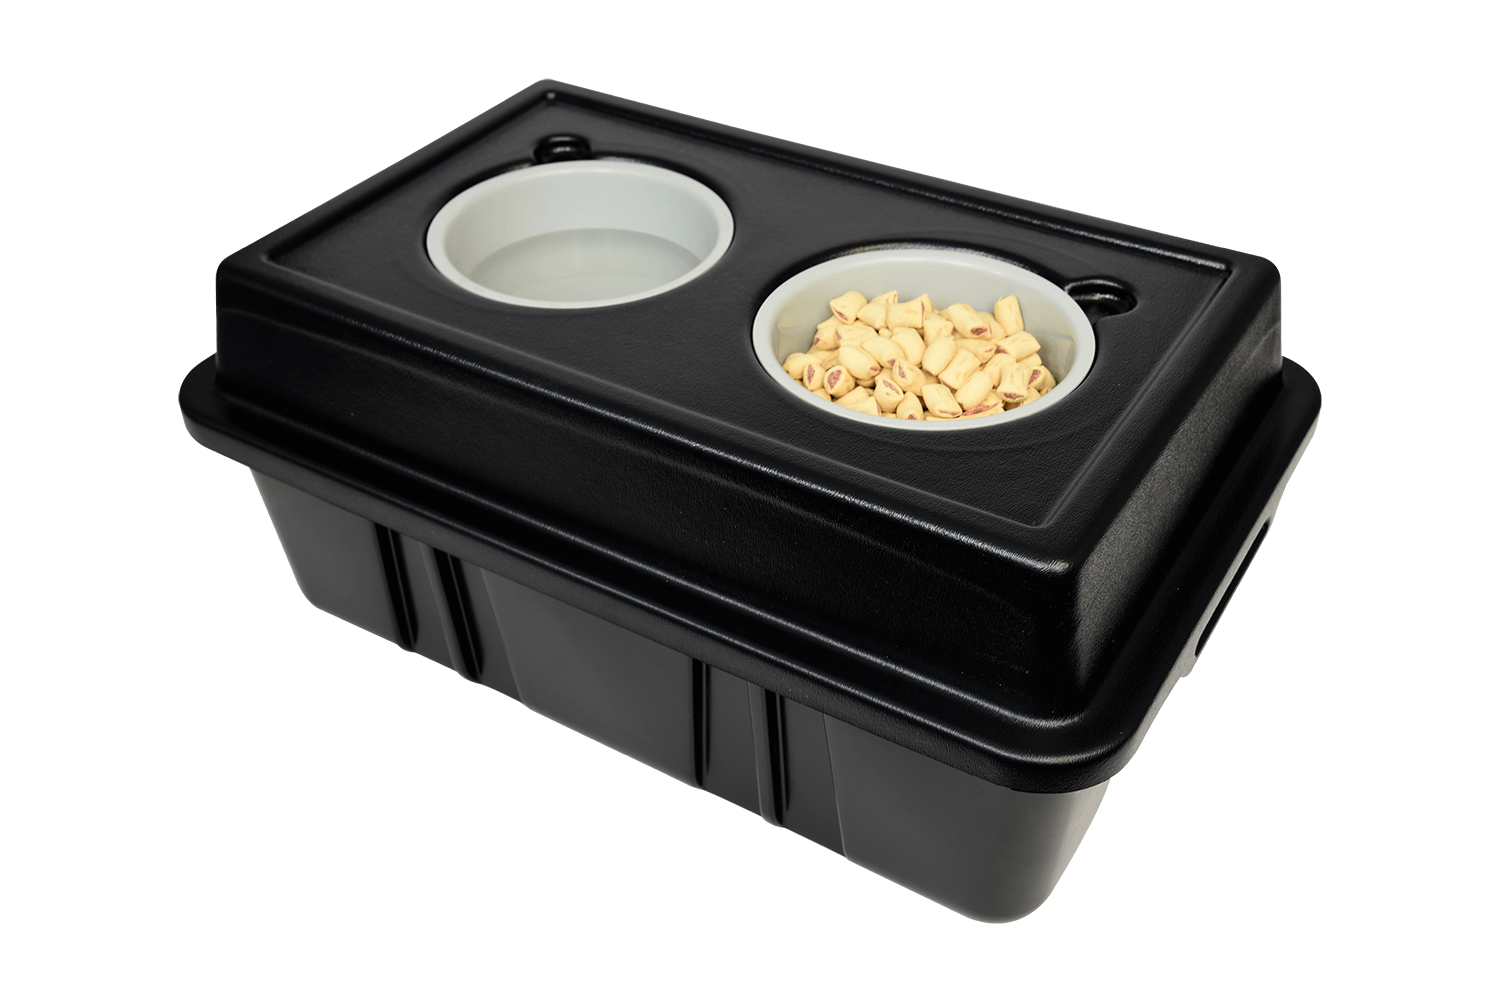 Pet Food Storage Tub With Built-in Scoop - 35lbs - Up & Up™ : Target